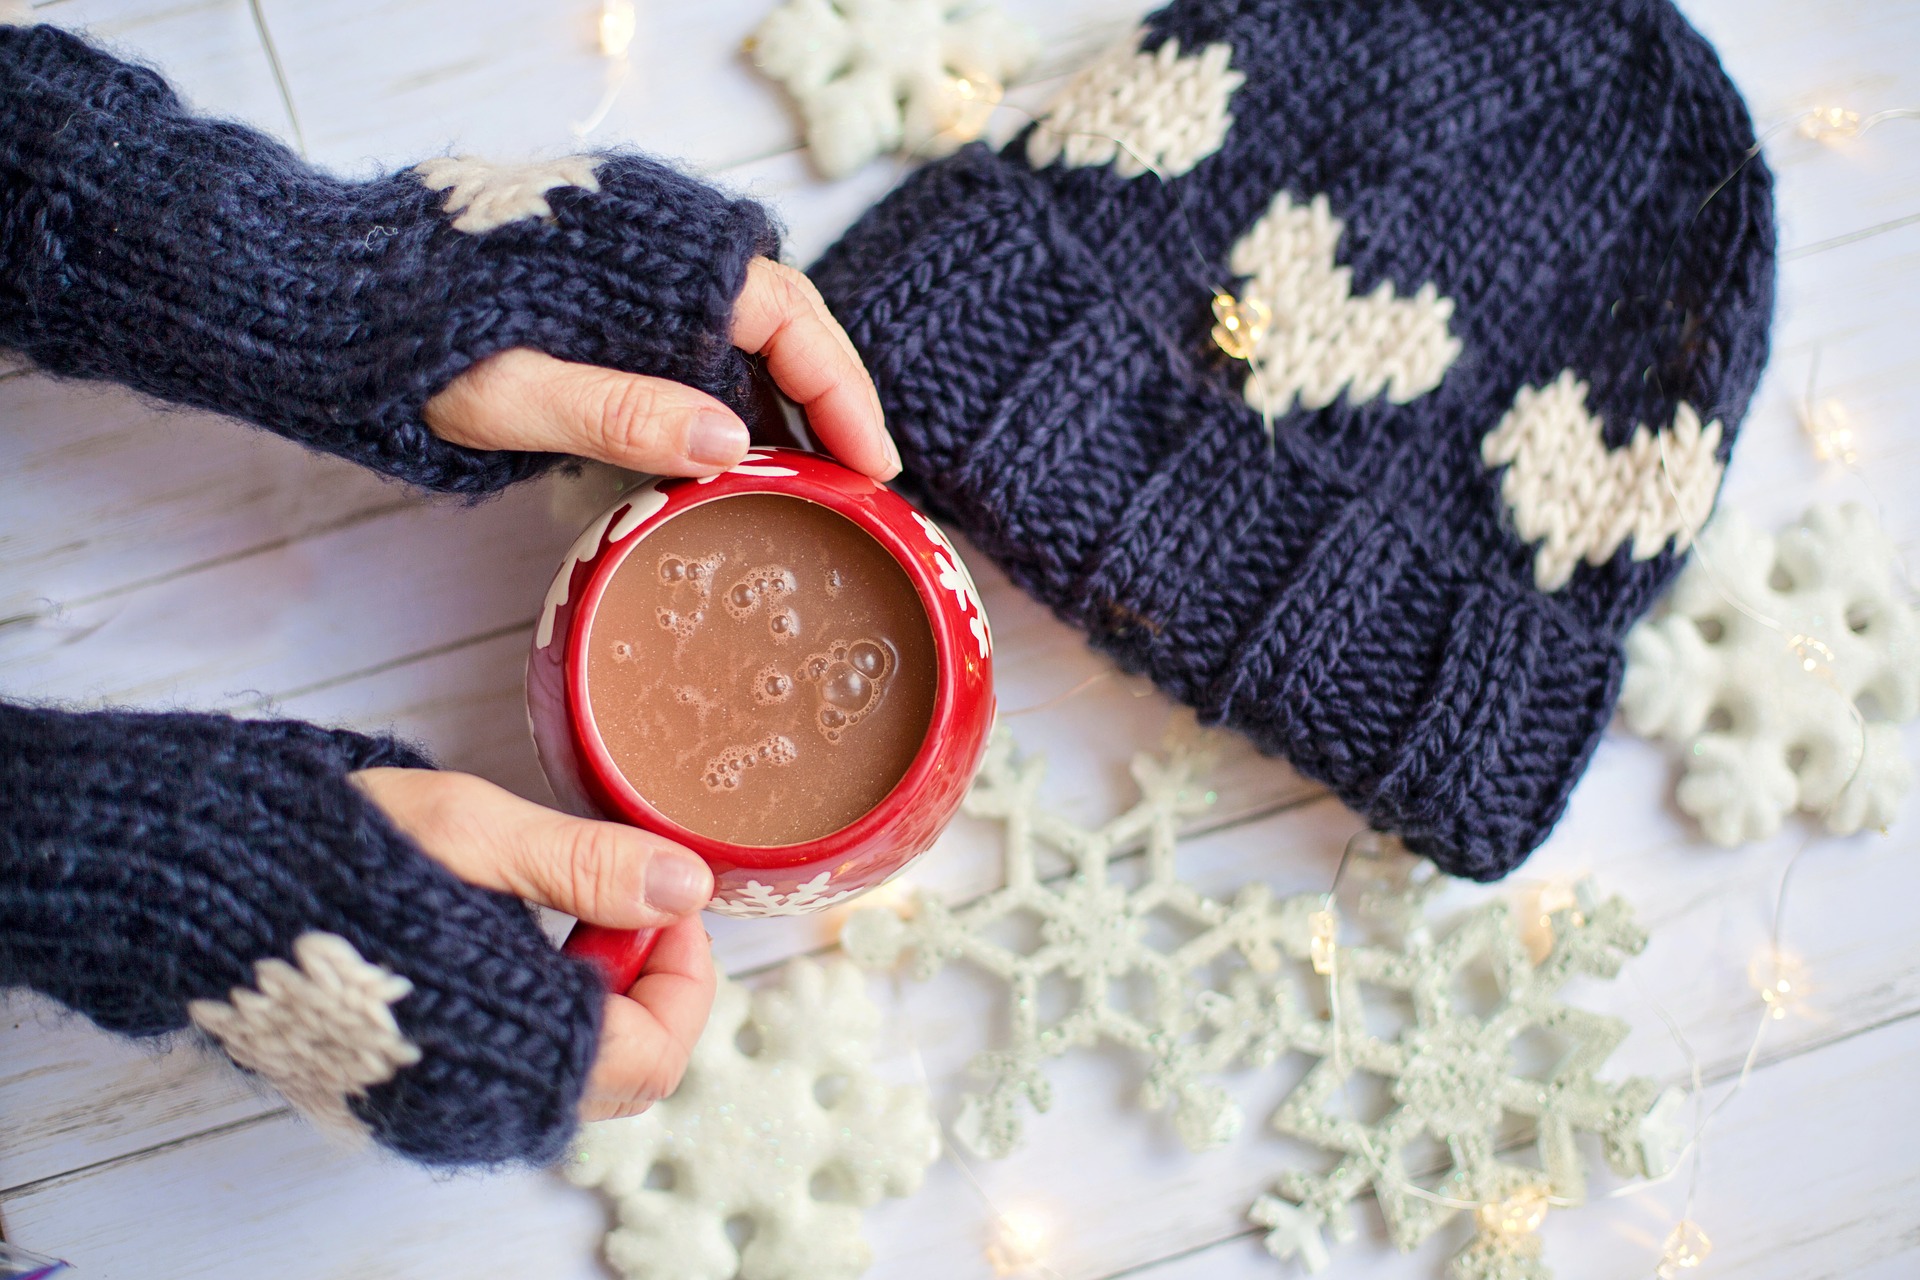 It’s easier with mittens. JilWellington @pixabay